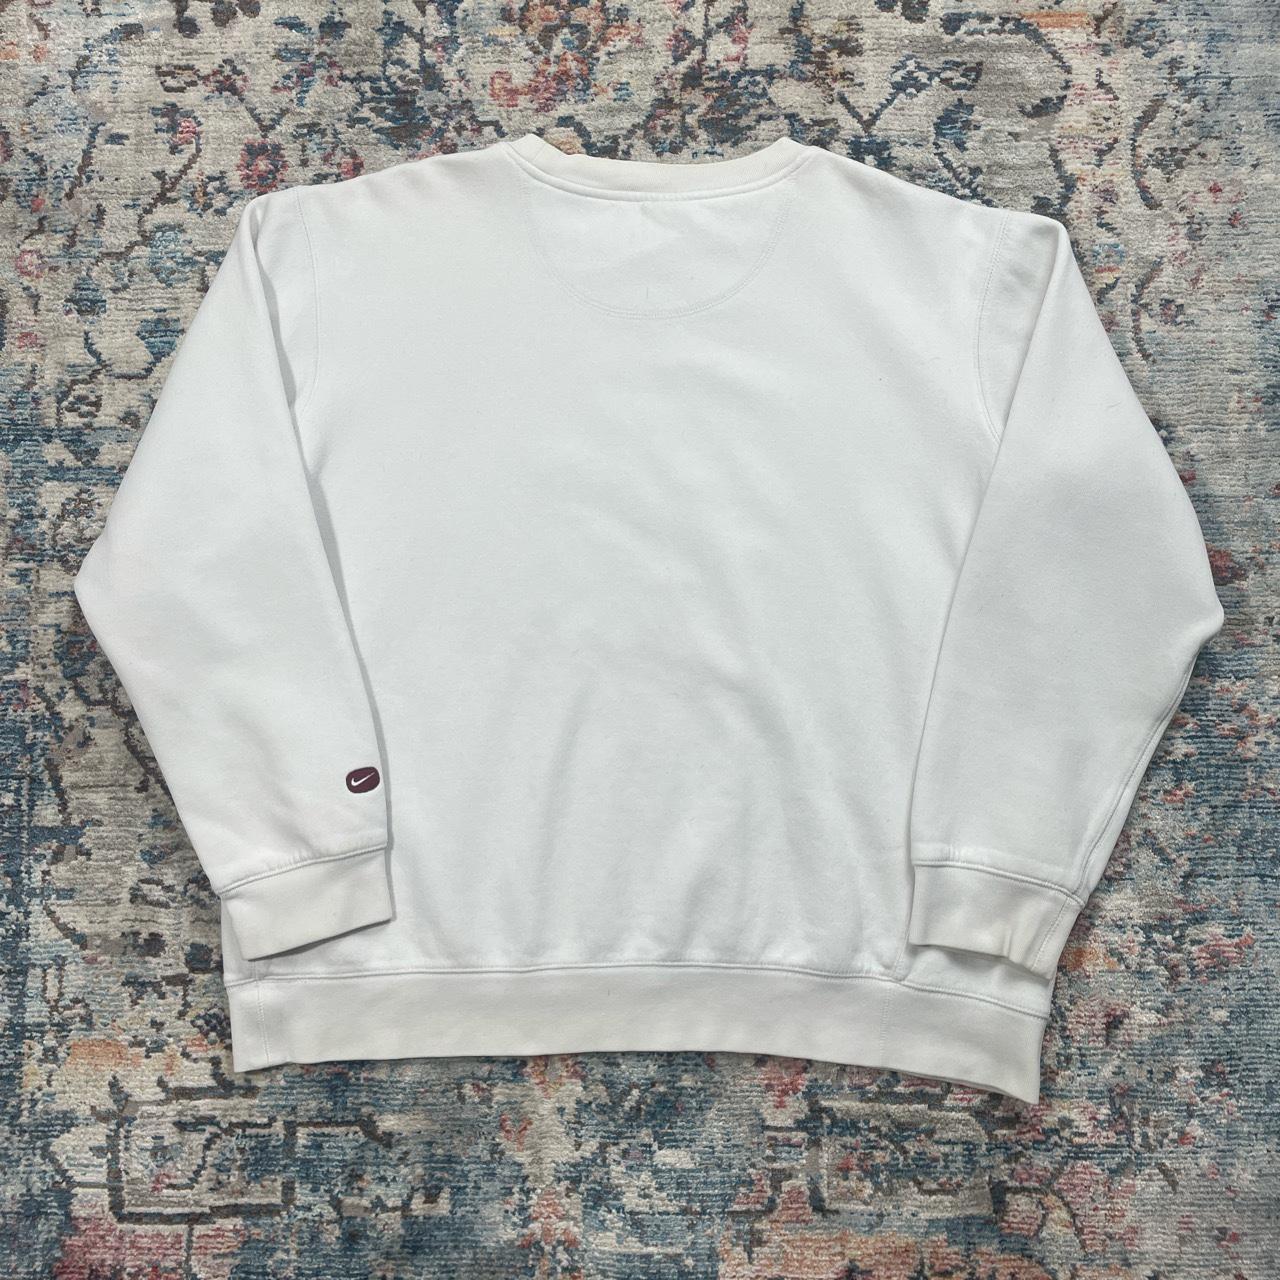 Vintage Nike White Spellout Sweatshirt